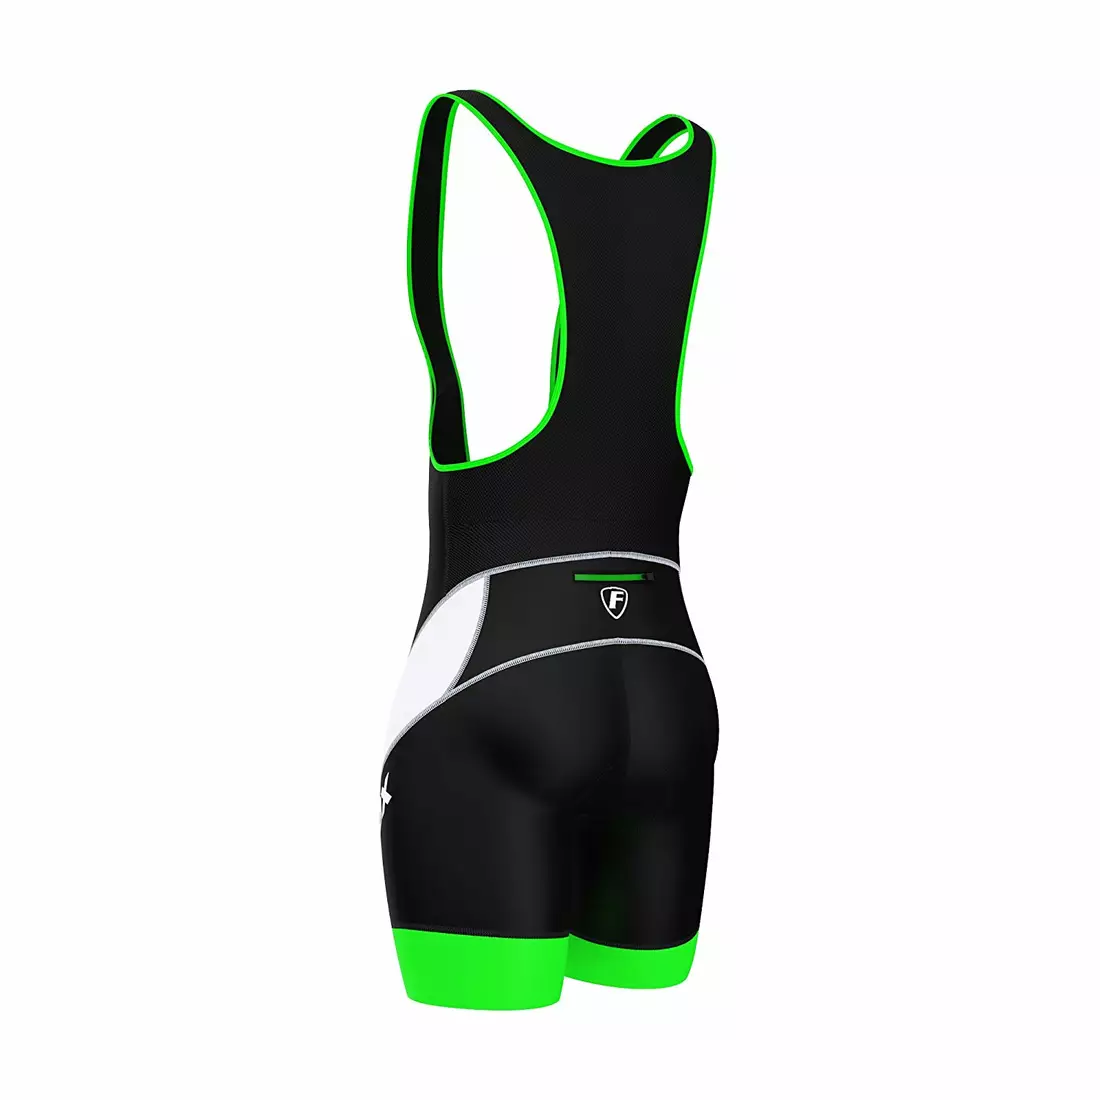 FDX 950 men's bib shorts, black and green